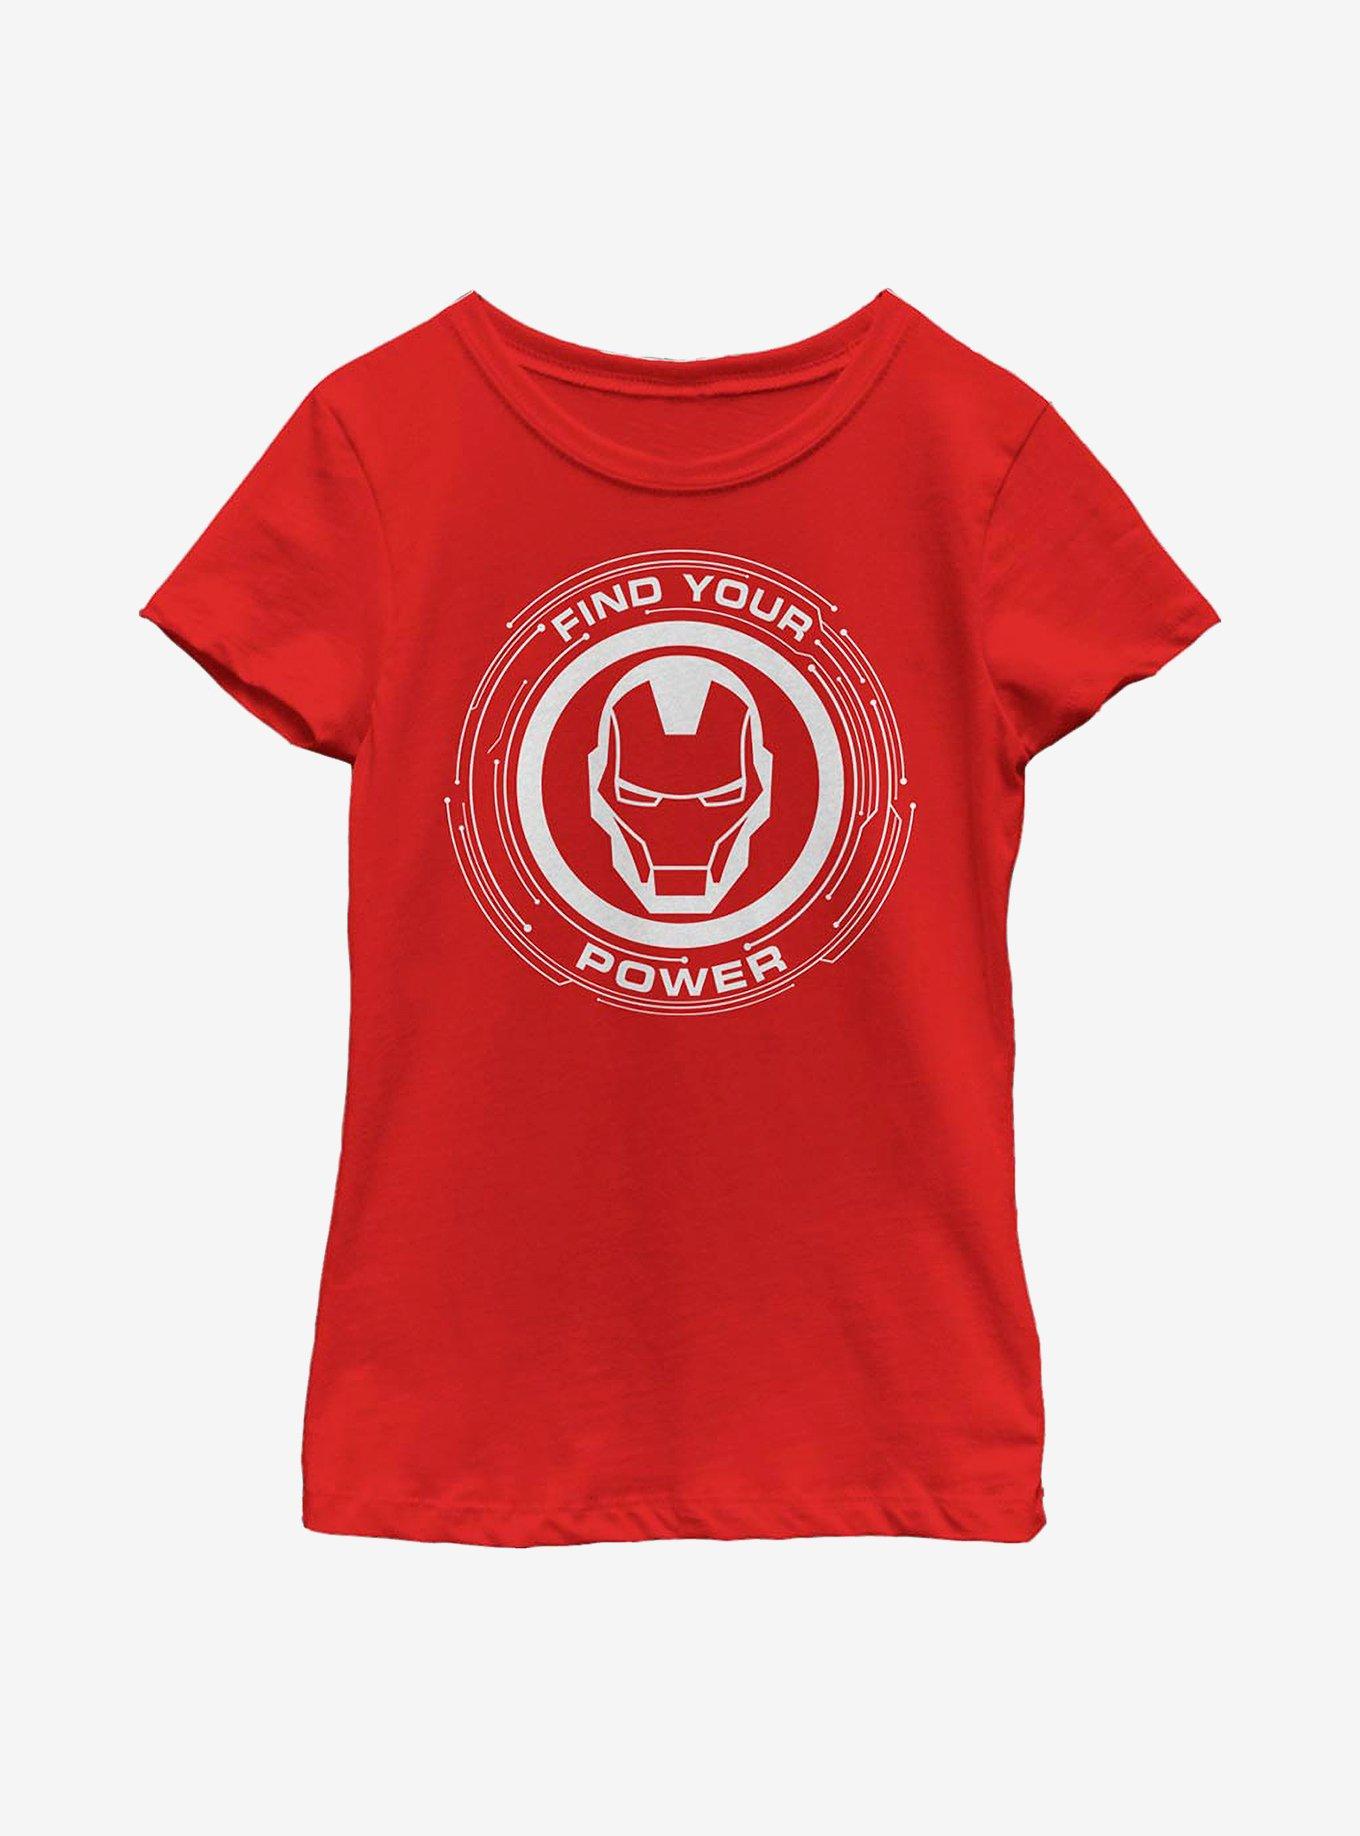 Marvel Iron Man Power Of Iron Man Youth Girls T-Shirt, RED, hi-res